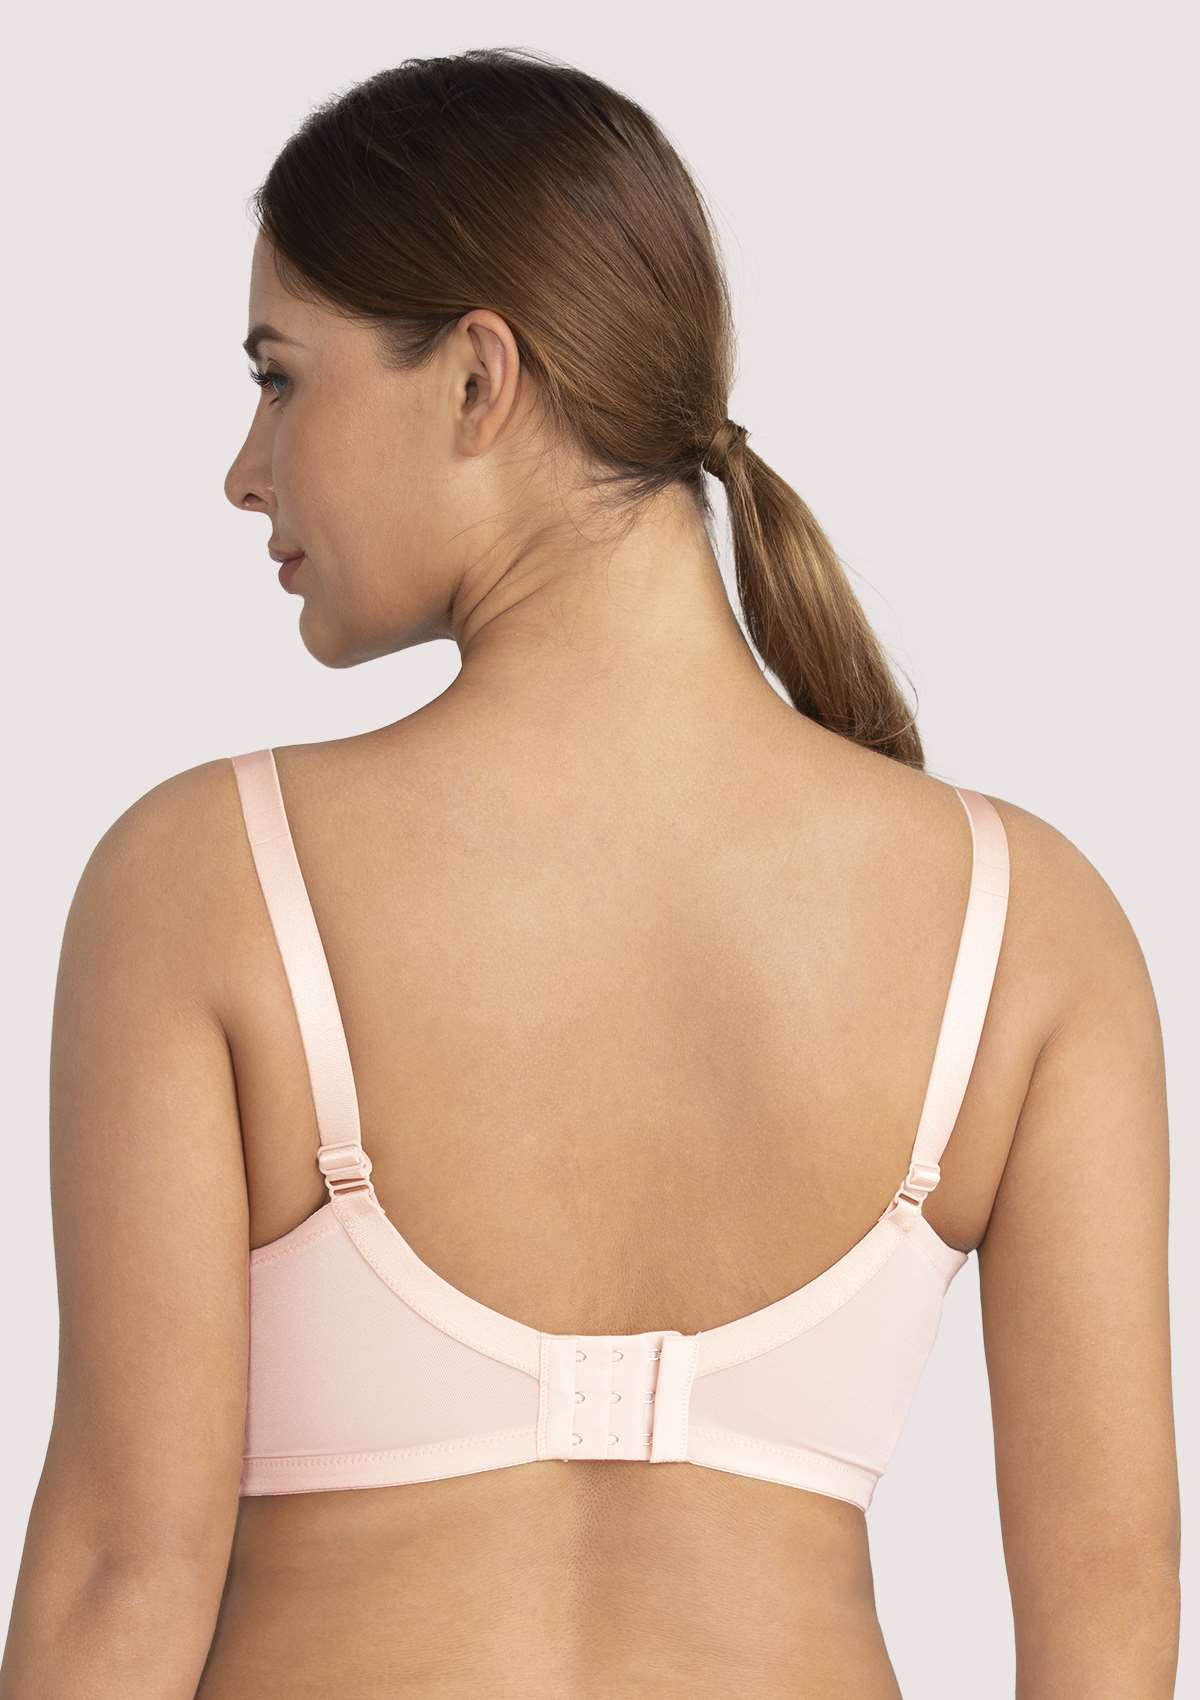 HSIA Sunflower Matching Bra And Panties Set: Comfortable Plus Size Bra - Pink / 40 / DD/E